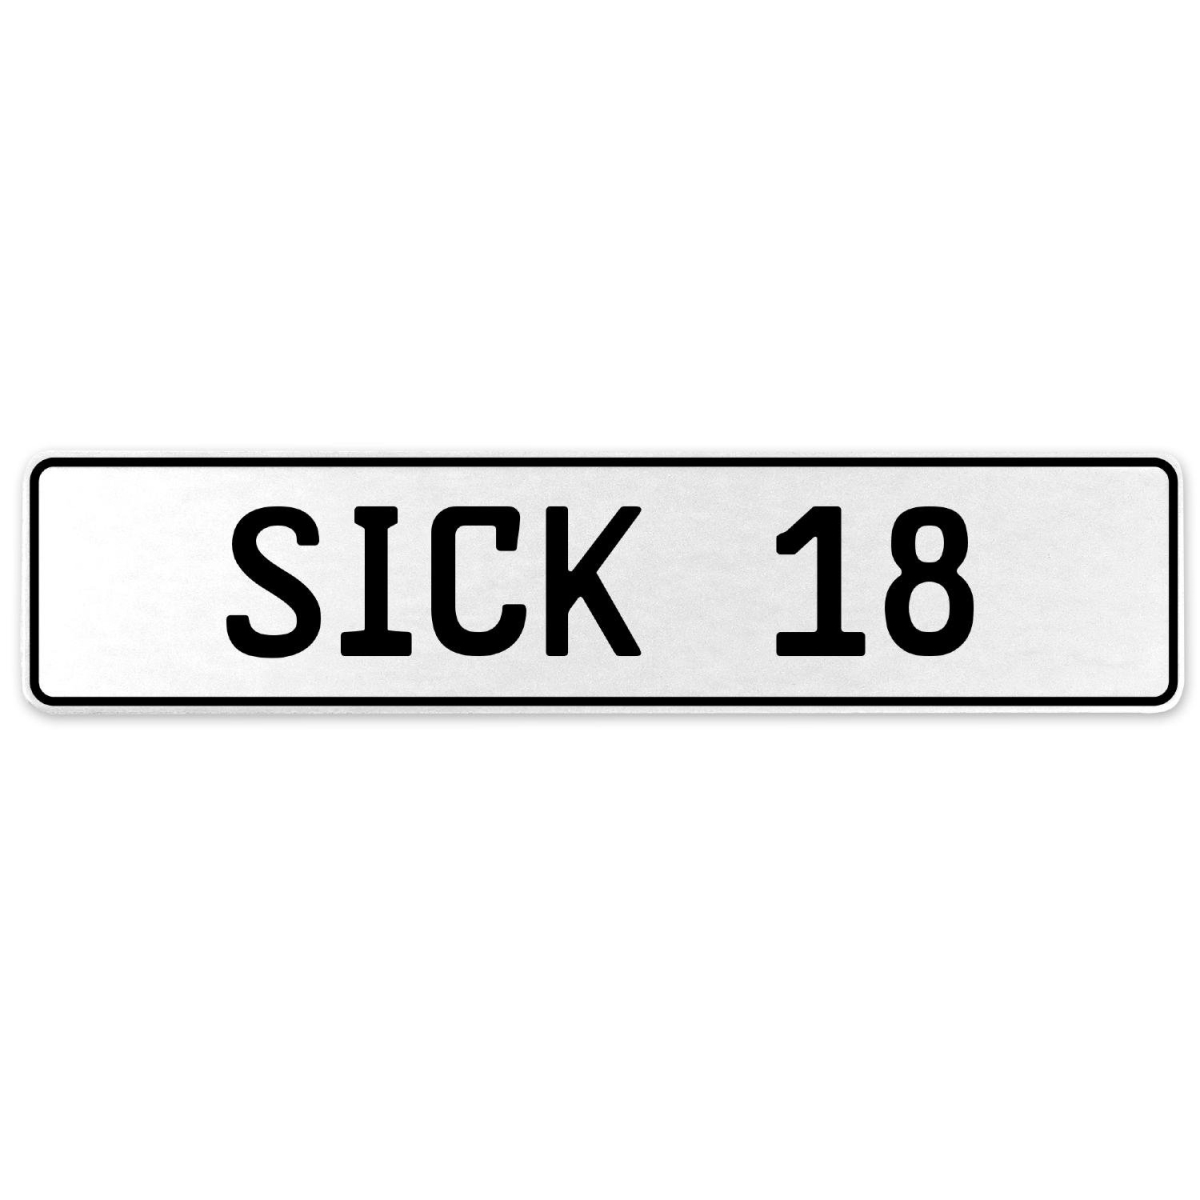 554318 Sick 18 - White Aluminum Street Sign Mancave Euro Plate Name Door Sign Wall